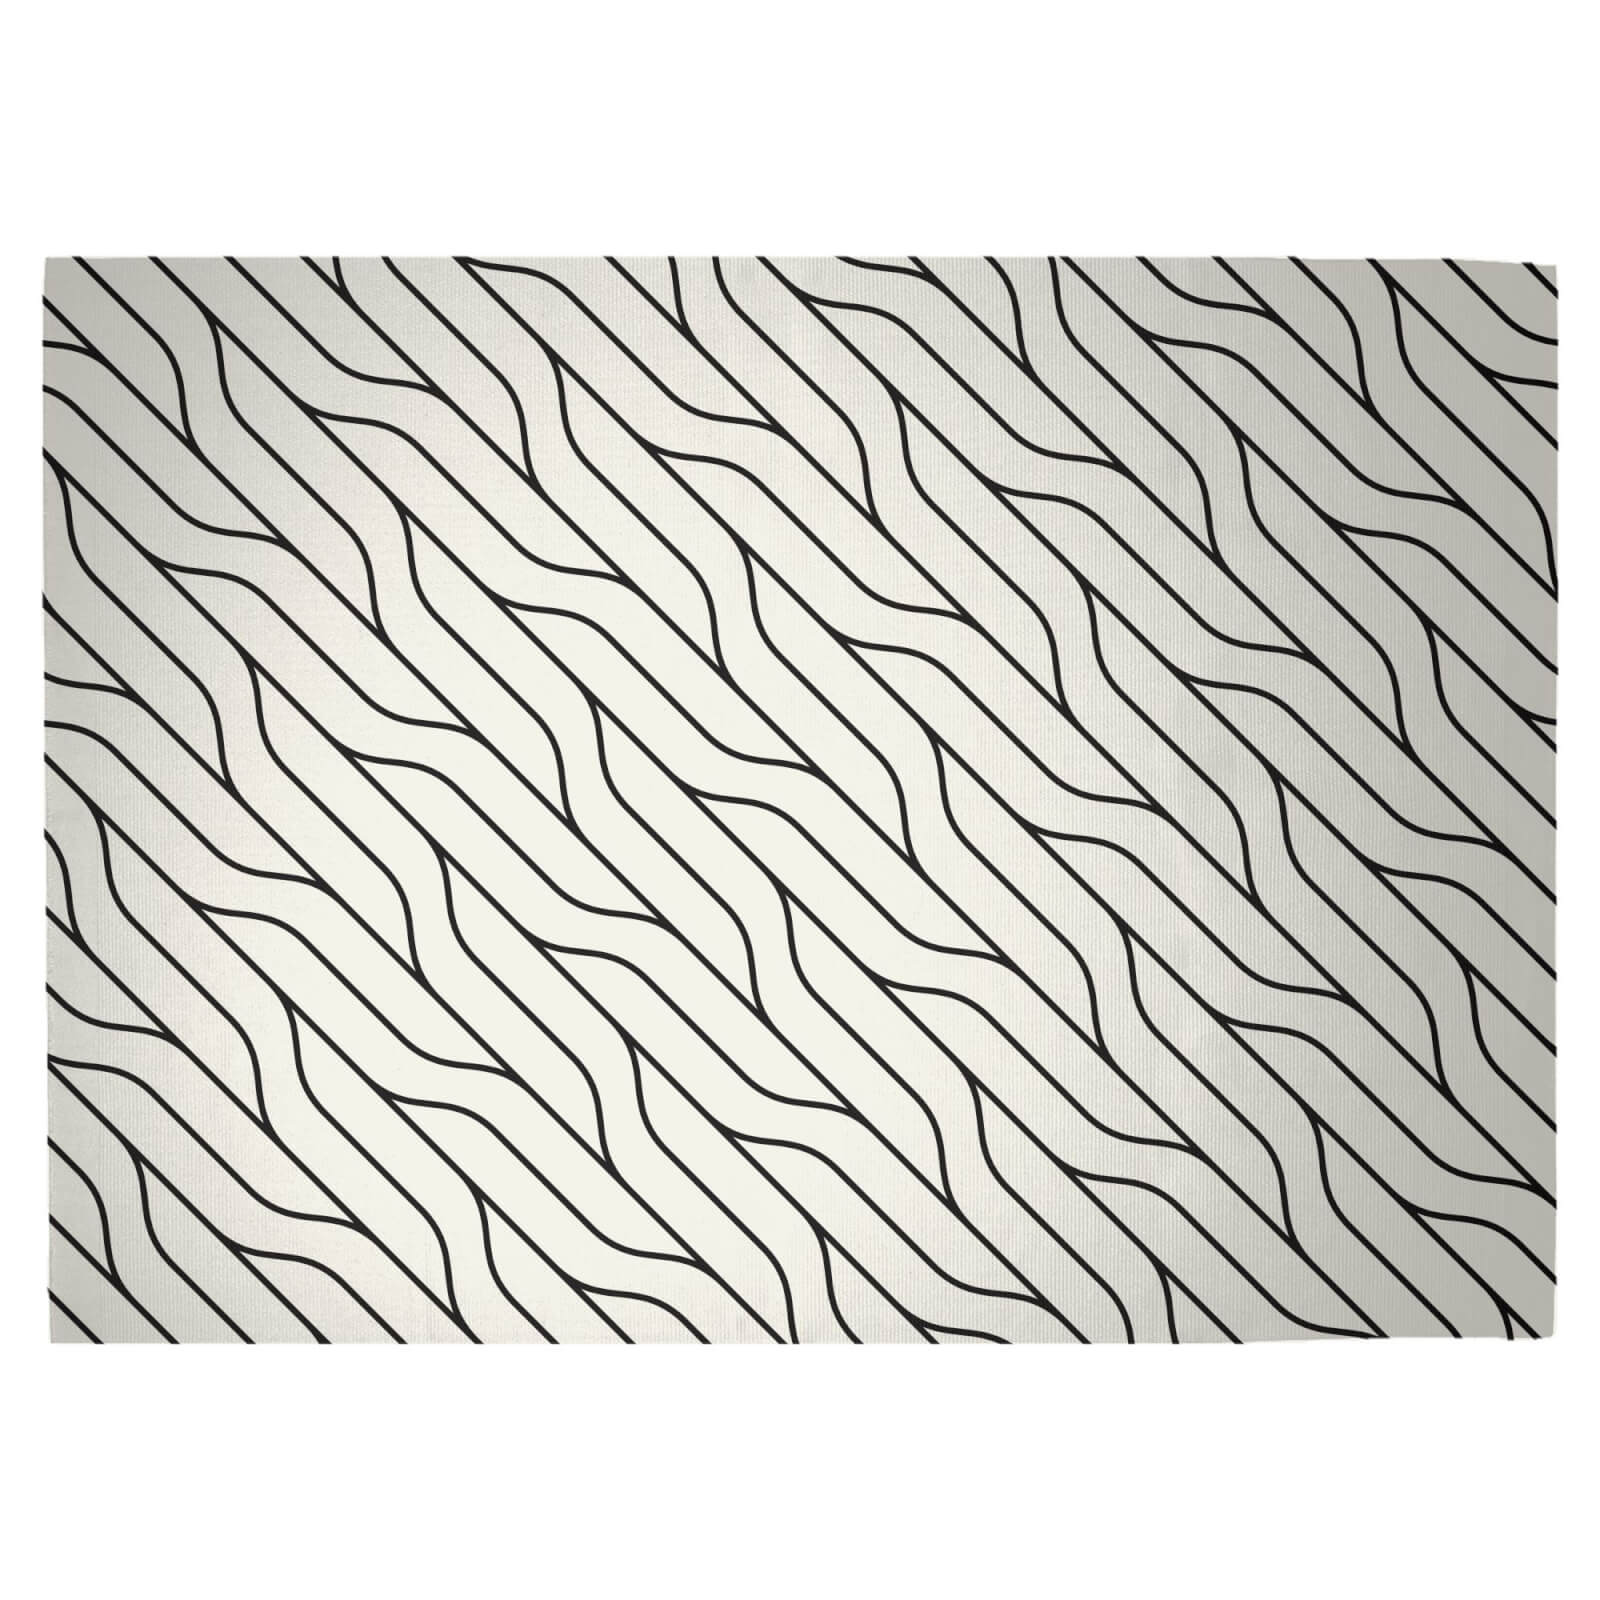 Diagonal Warped Lines Woven Rug - Large